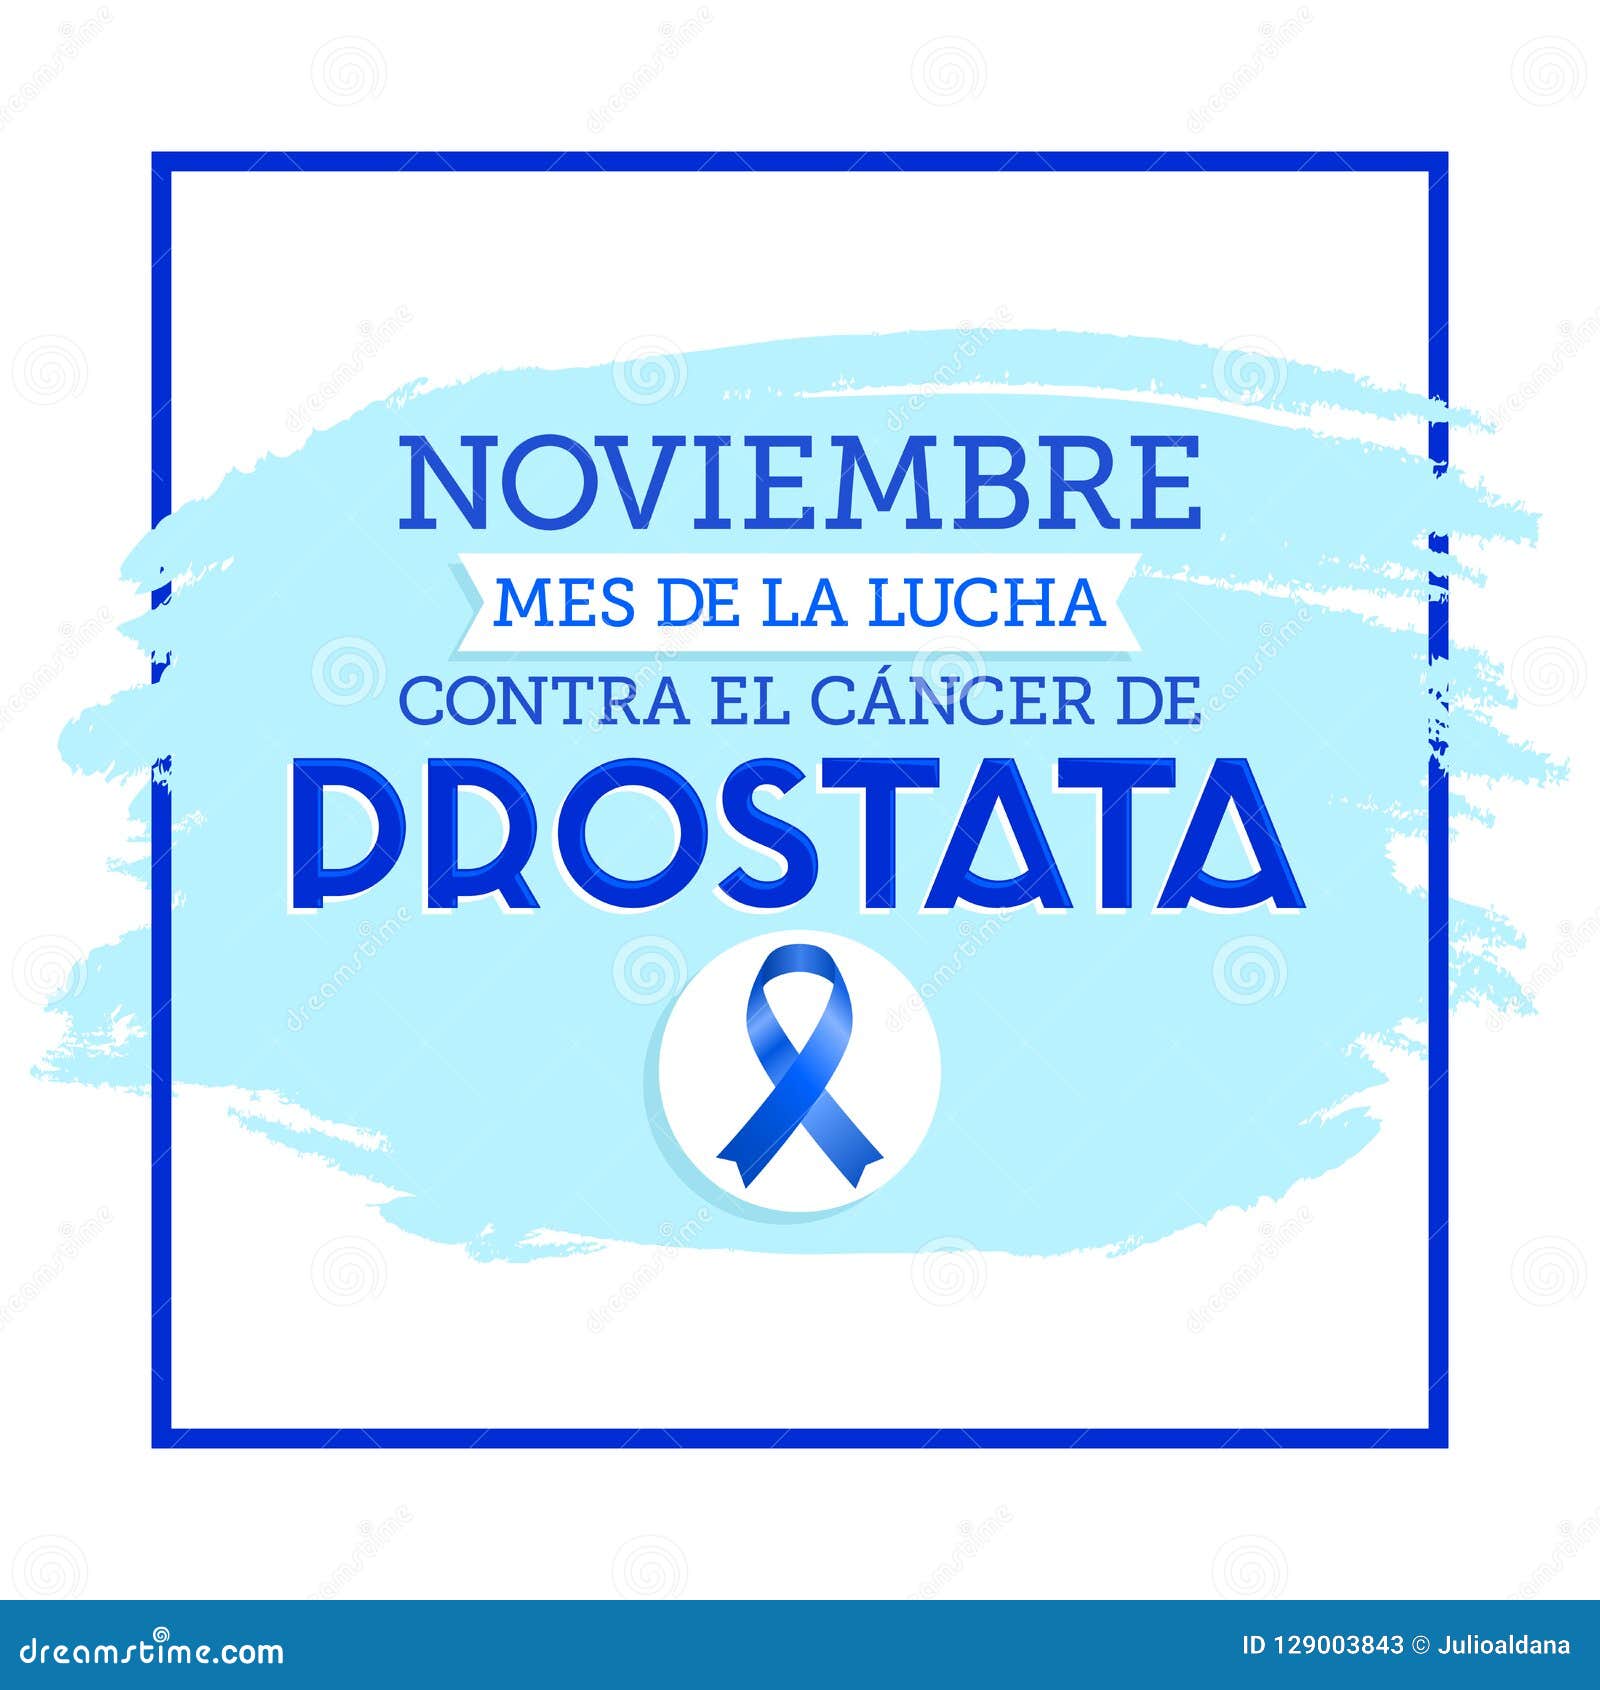 noviembre mes de la lucha contra el cancer de prostata, november month of fight against prostate cancer spanish text